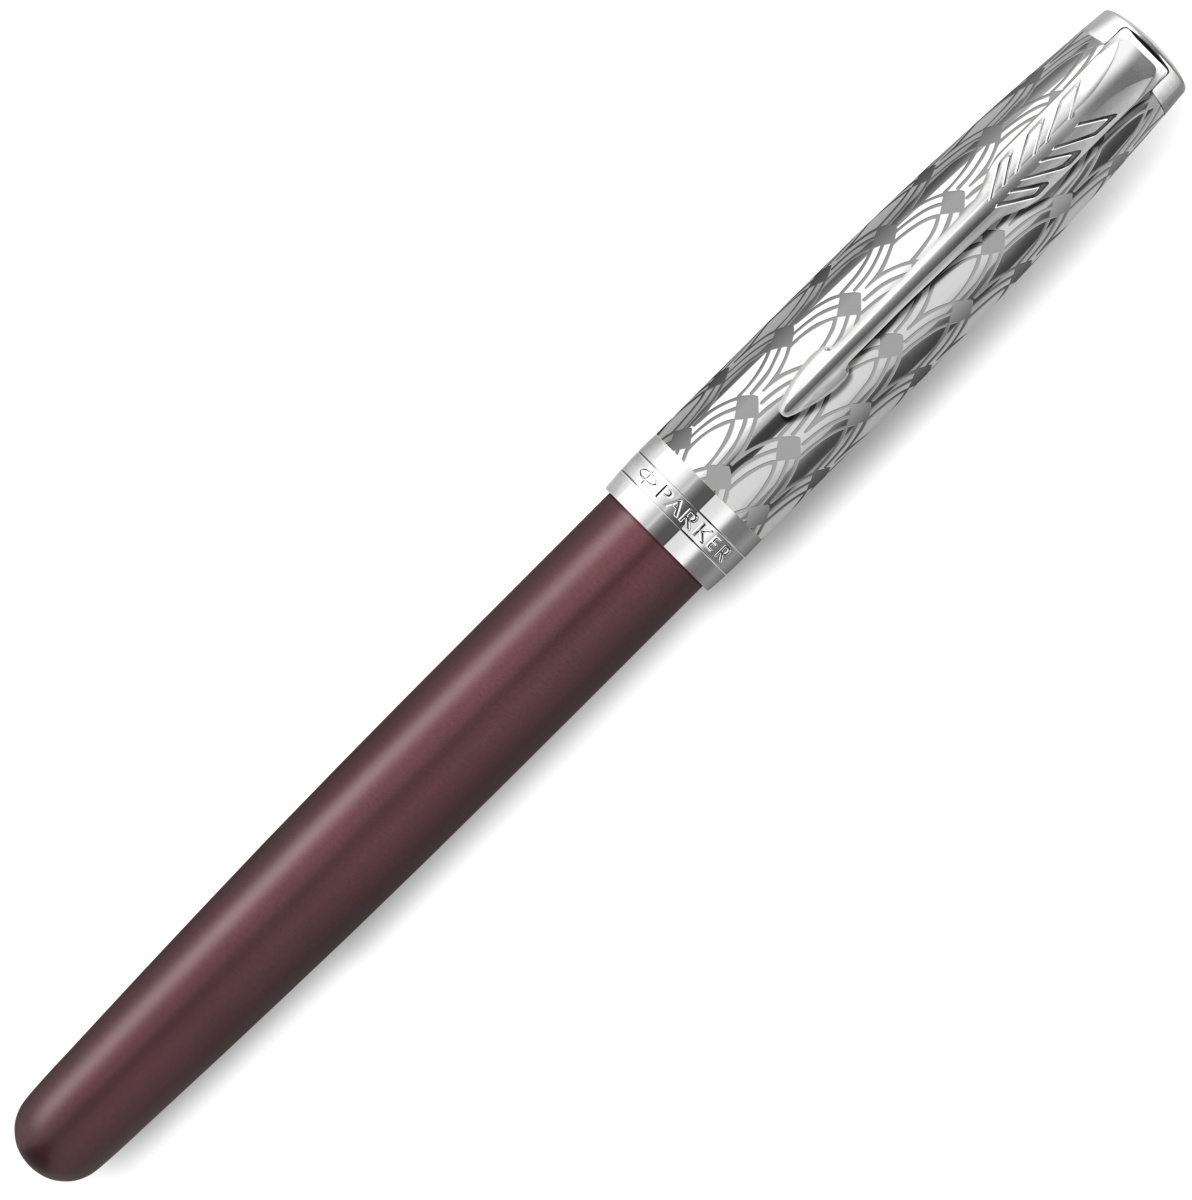  Ручка перьевая Parker Sonnet Premium F537, Metal Red CT (Перо F), фото 2